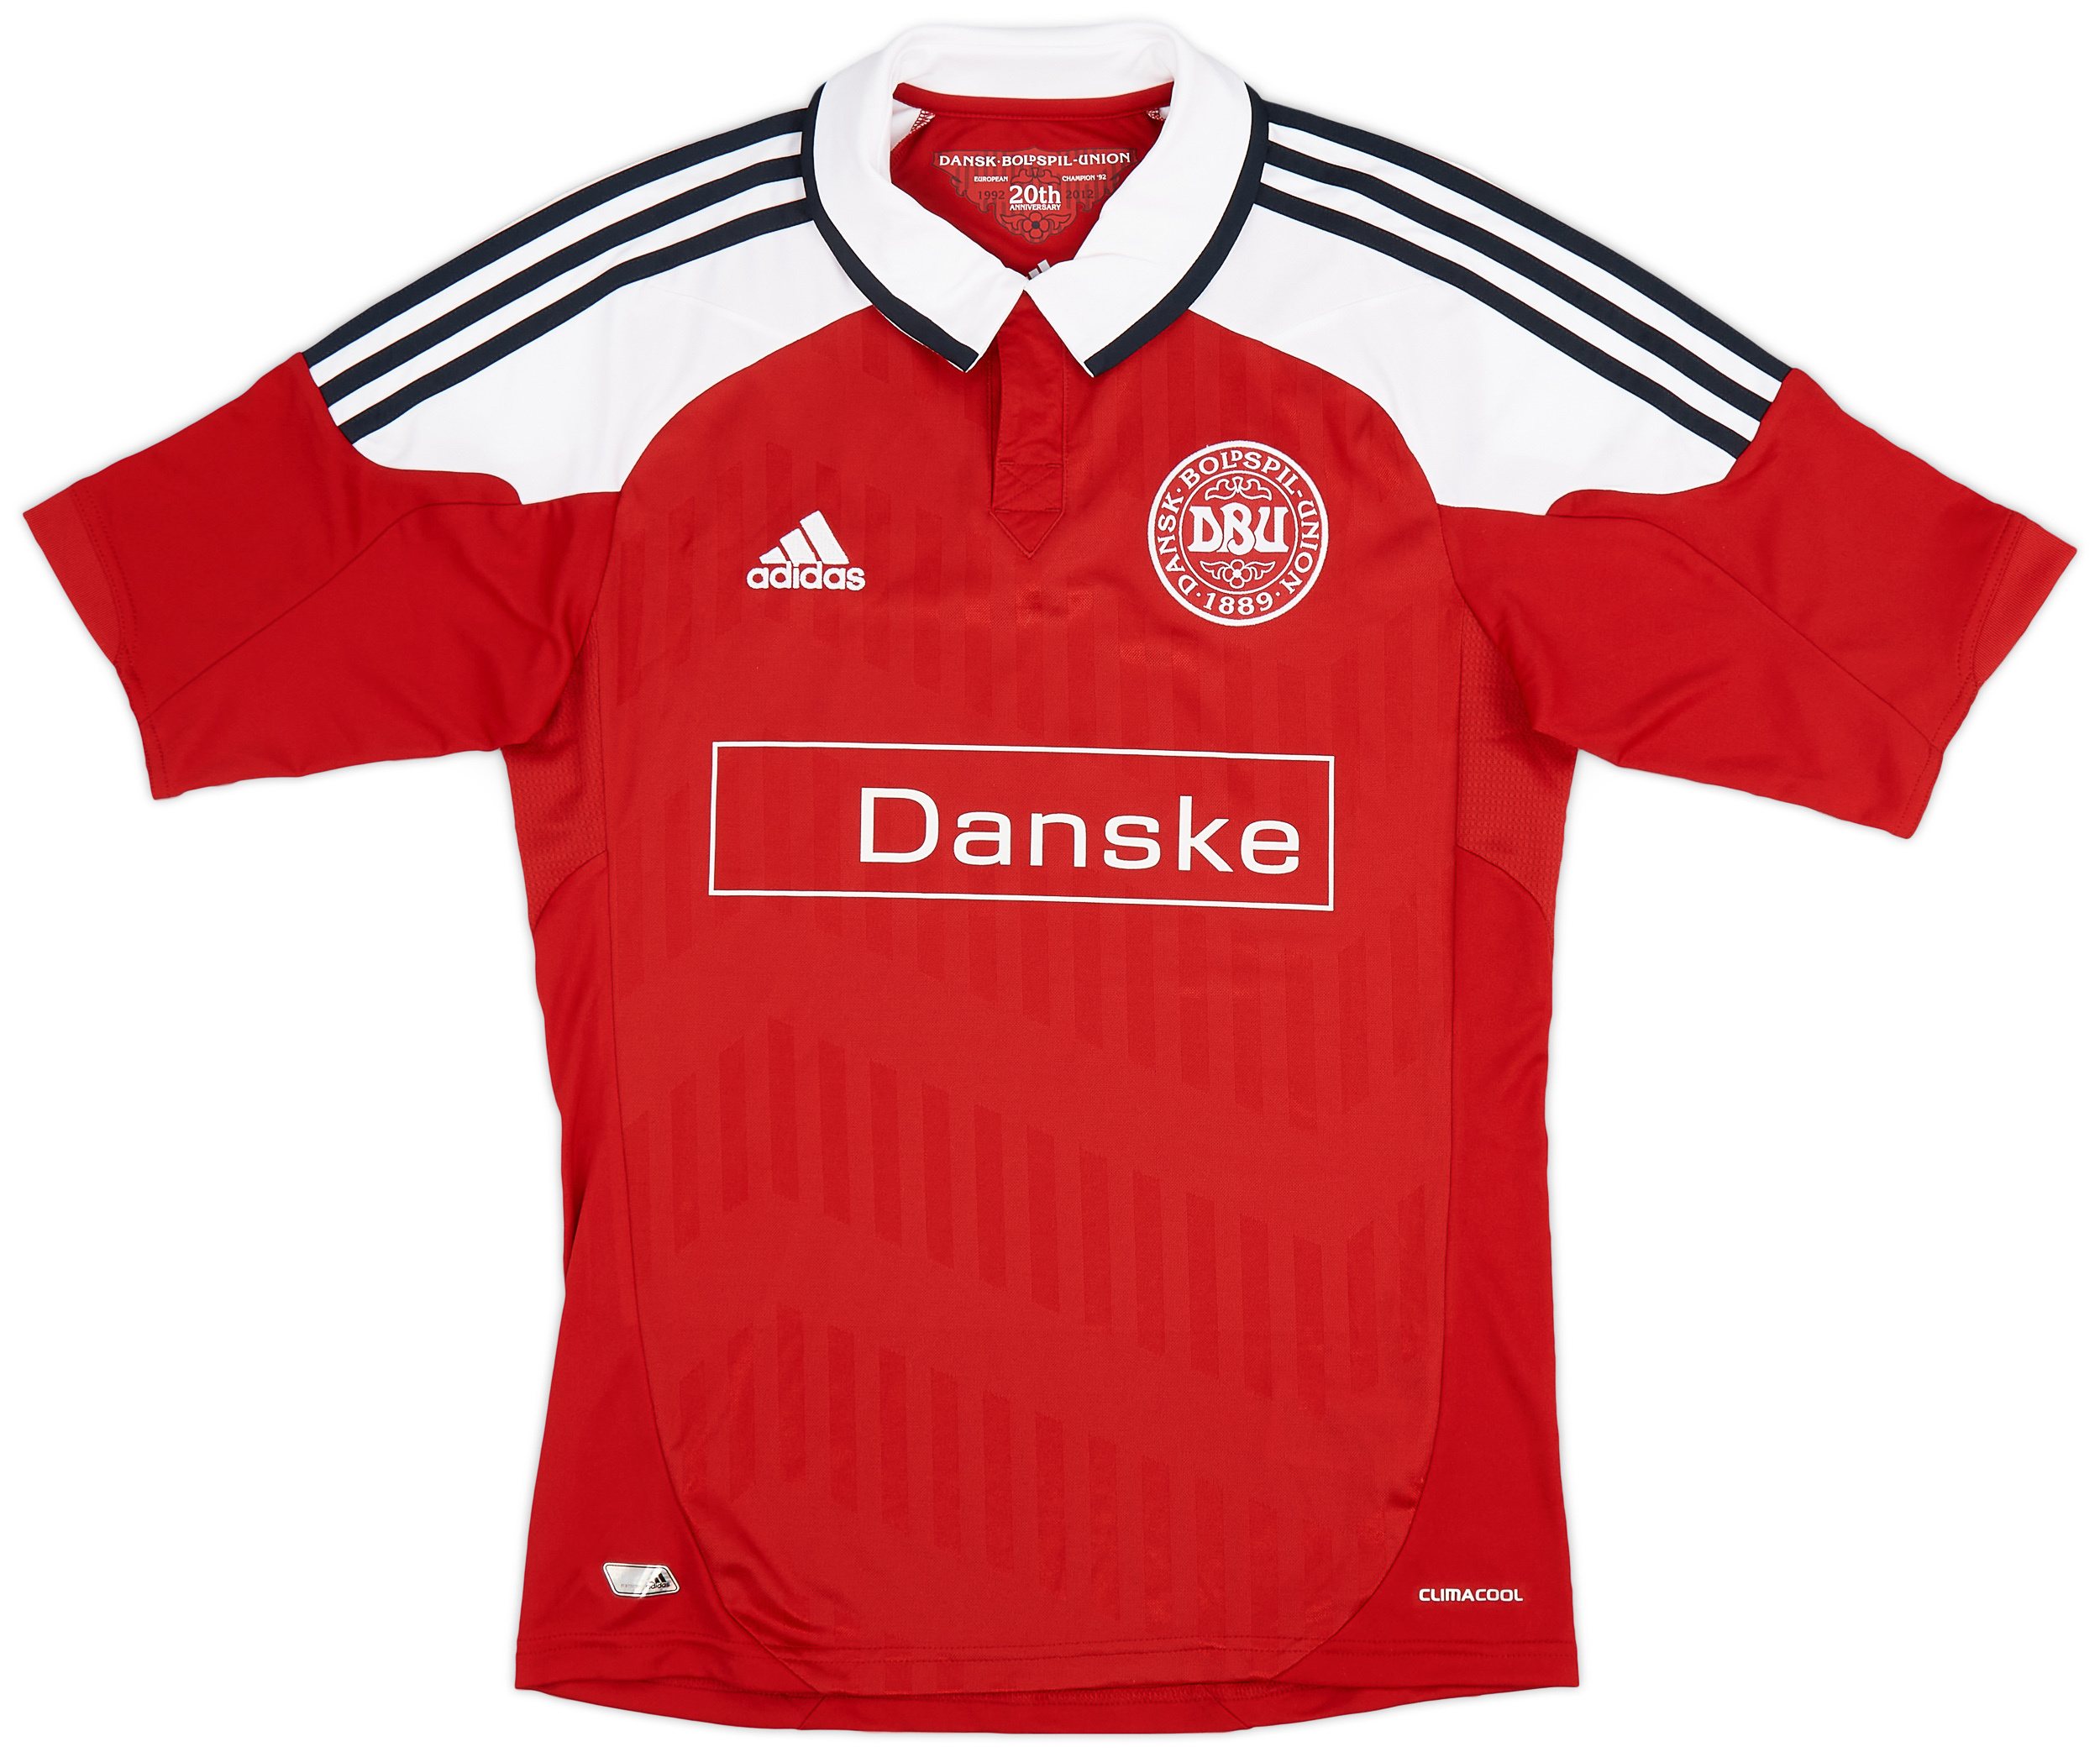 2012-13 Denmark Home Shirt - 9/10 - ()